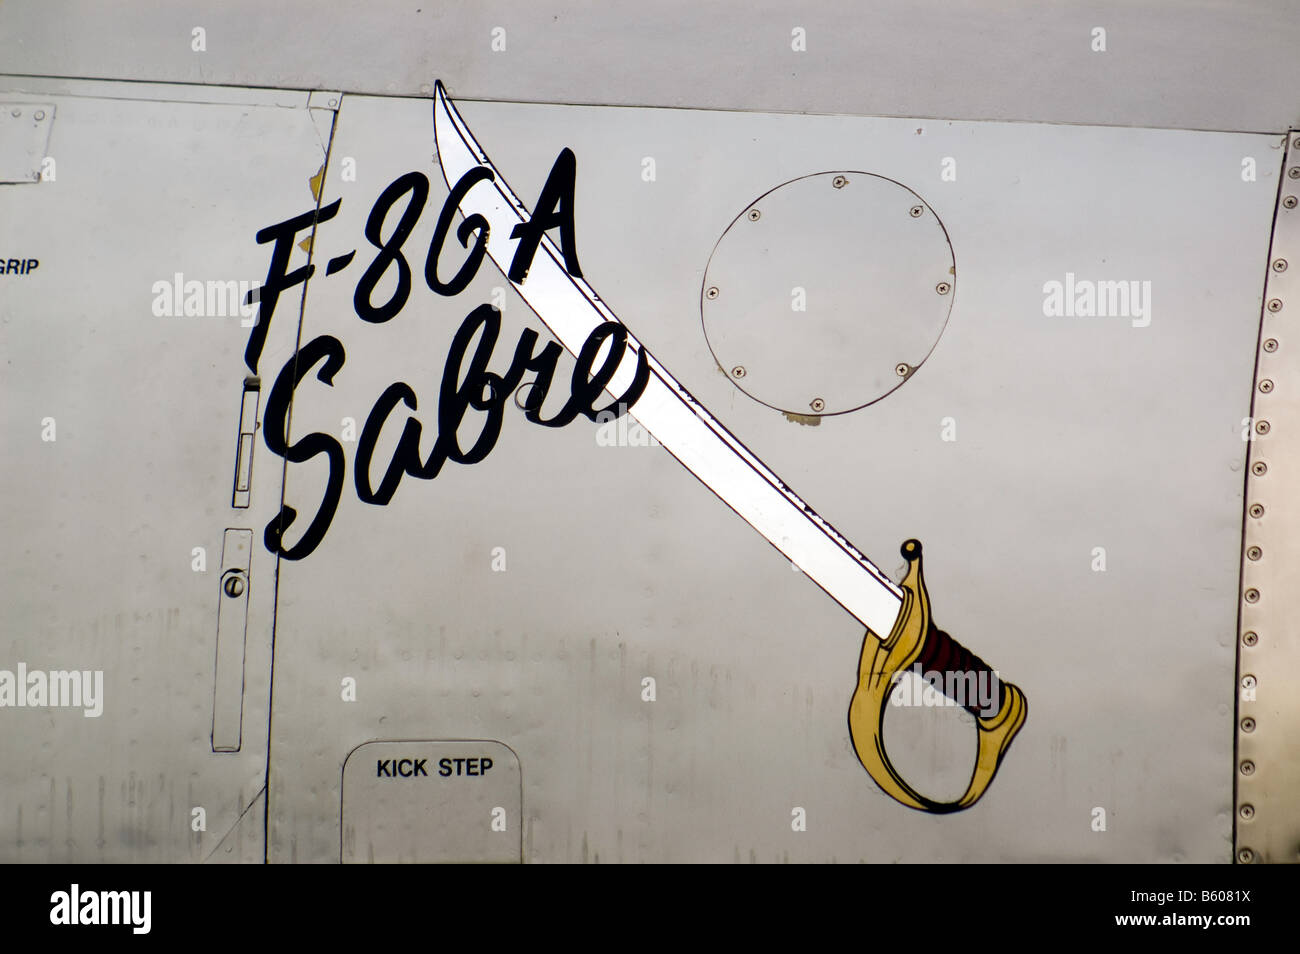 F86 North American Sabre Fighter Plane at the Biggin Hill airshow Stock Photo